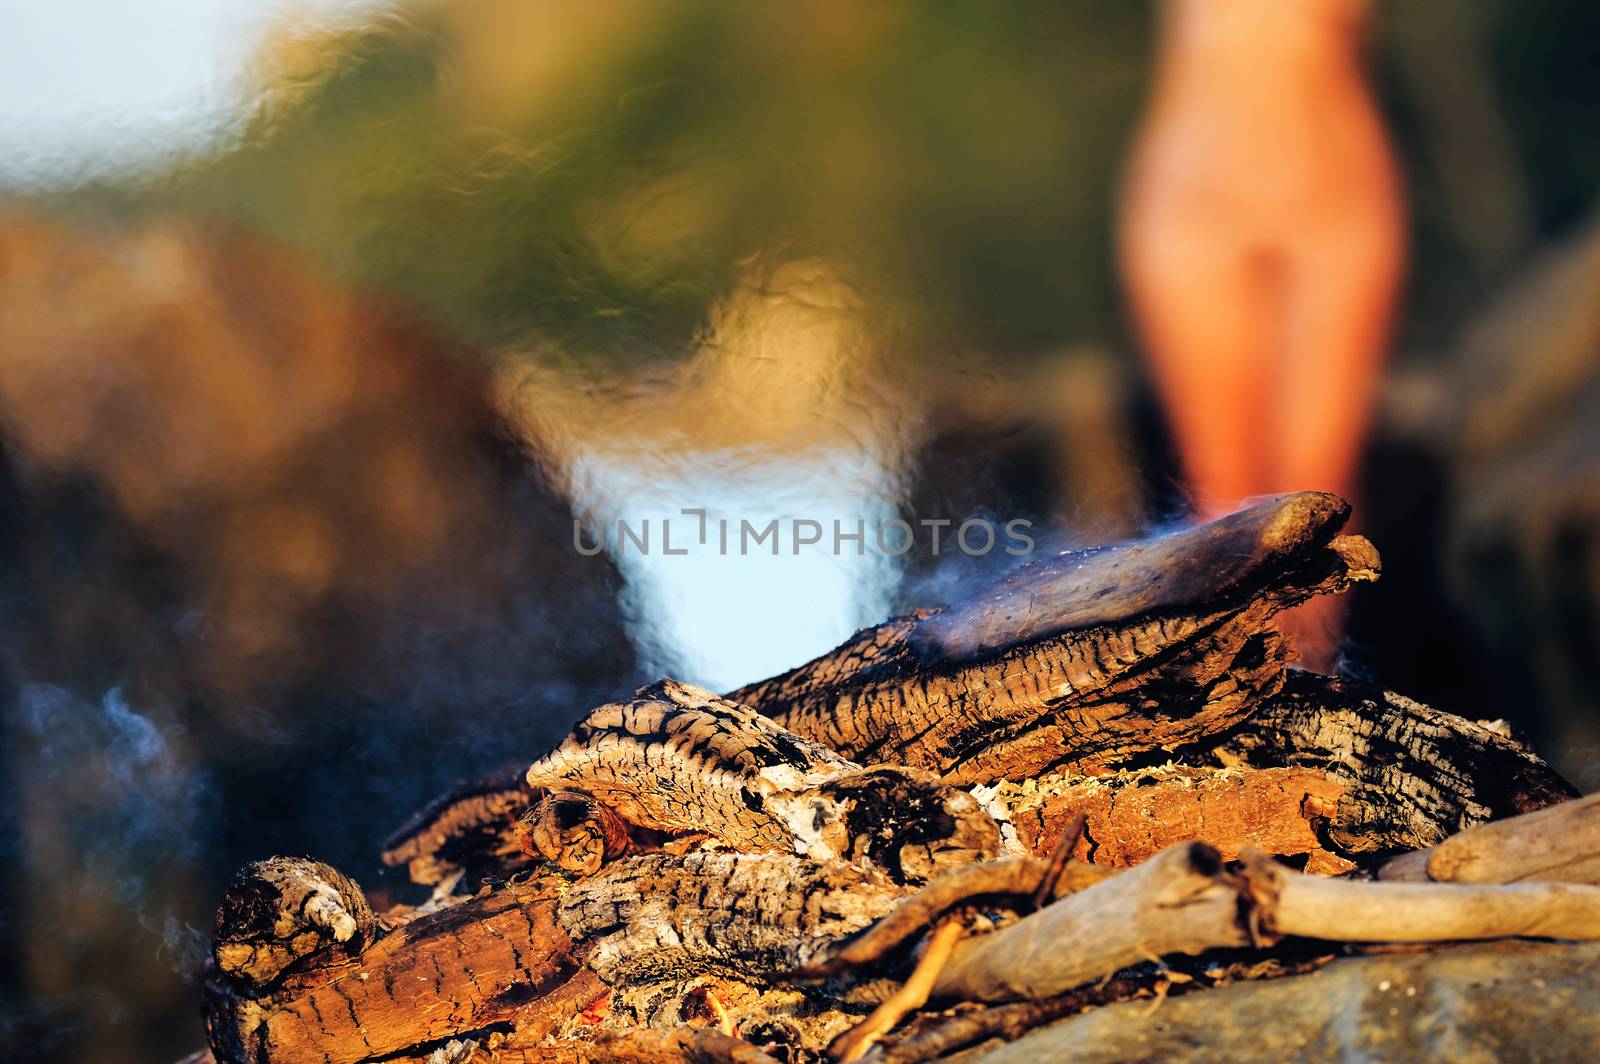 Nude woman near the bonfire by styf22